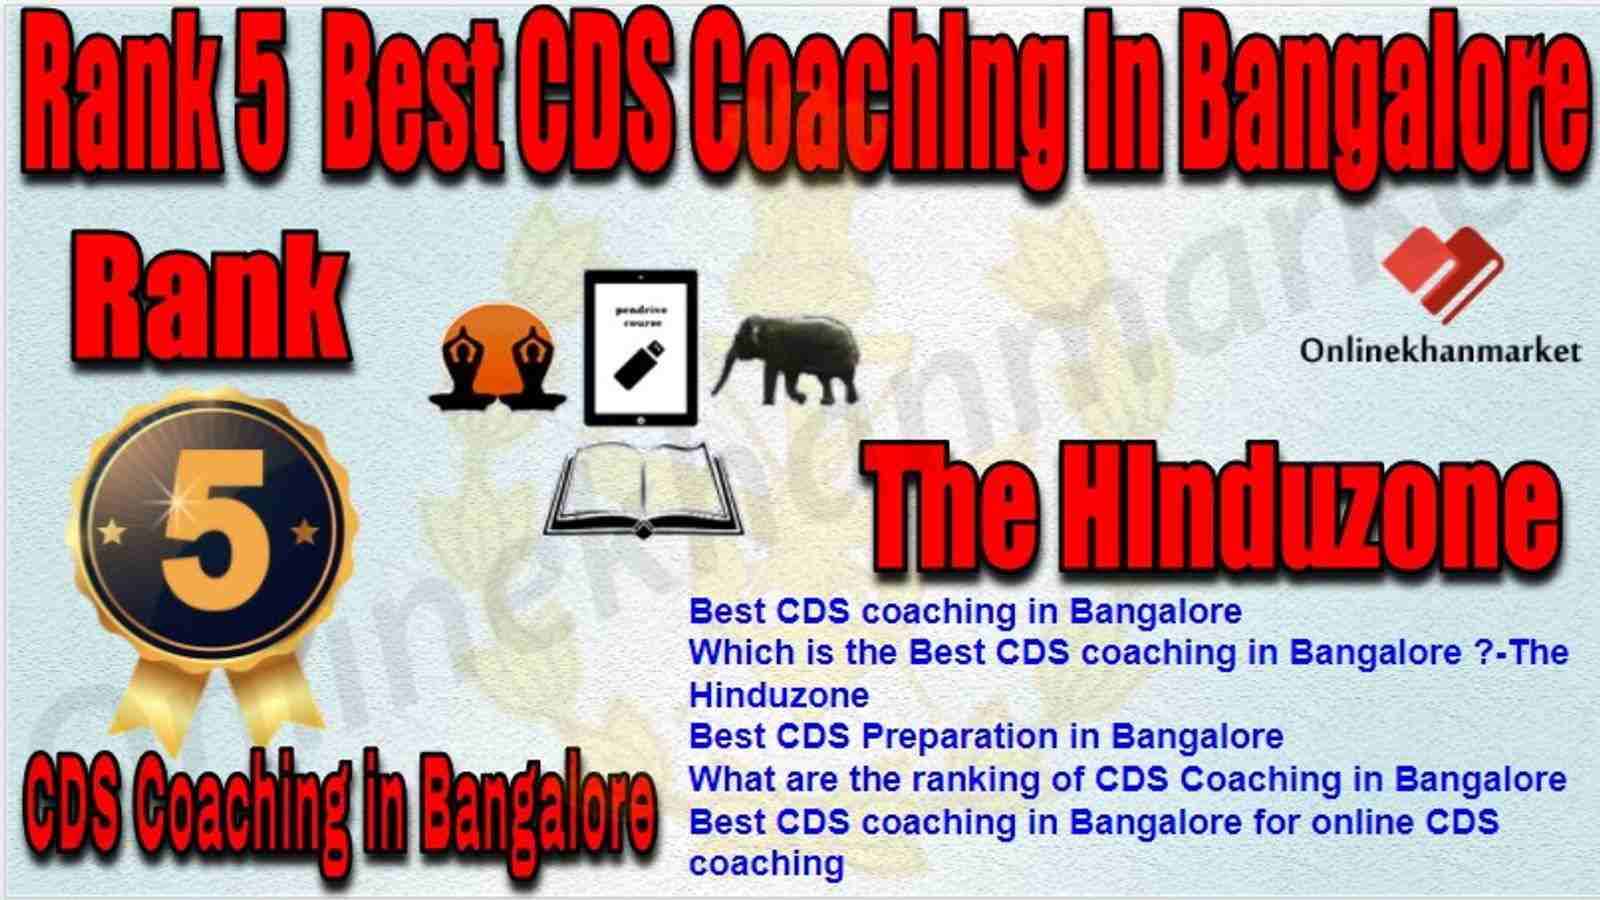 Rank 5 Best CDS Coaching inn bangalore